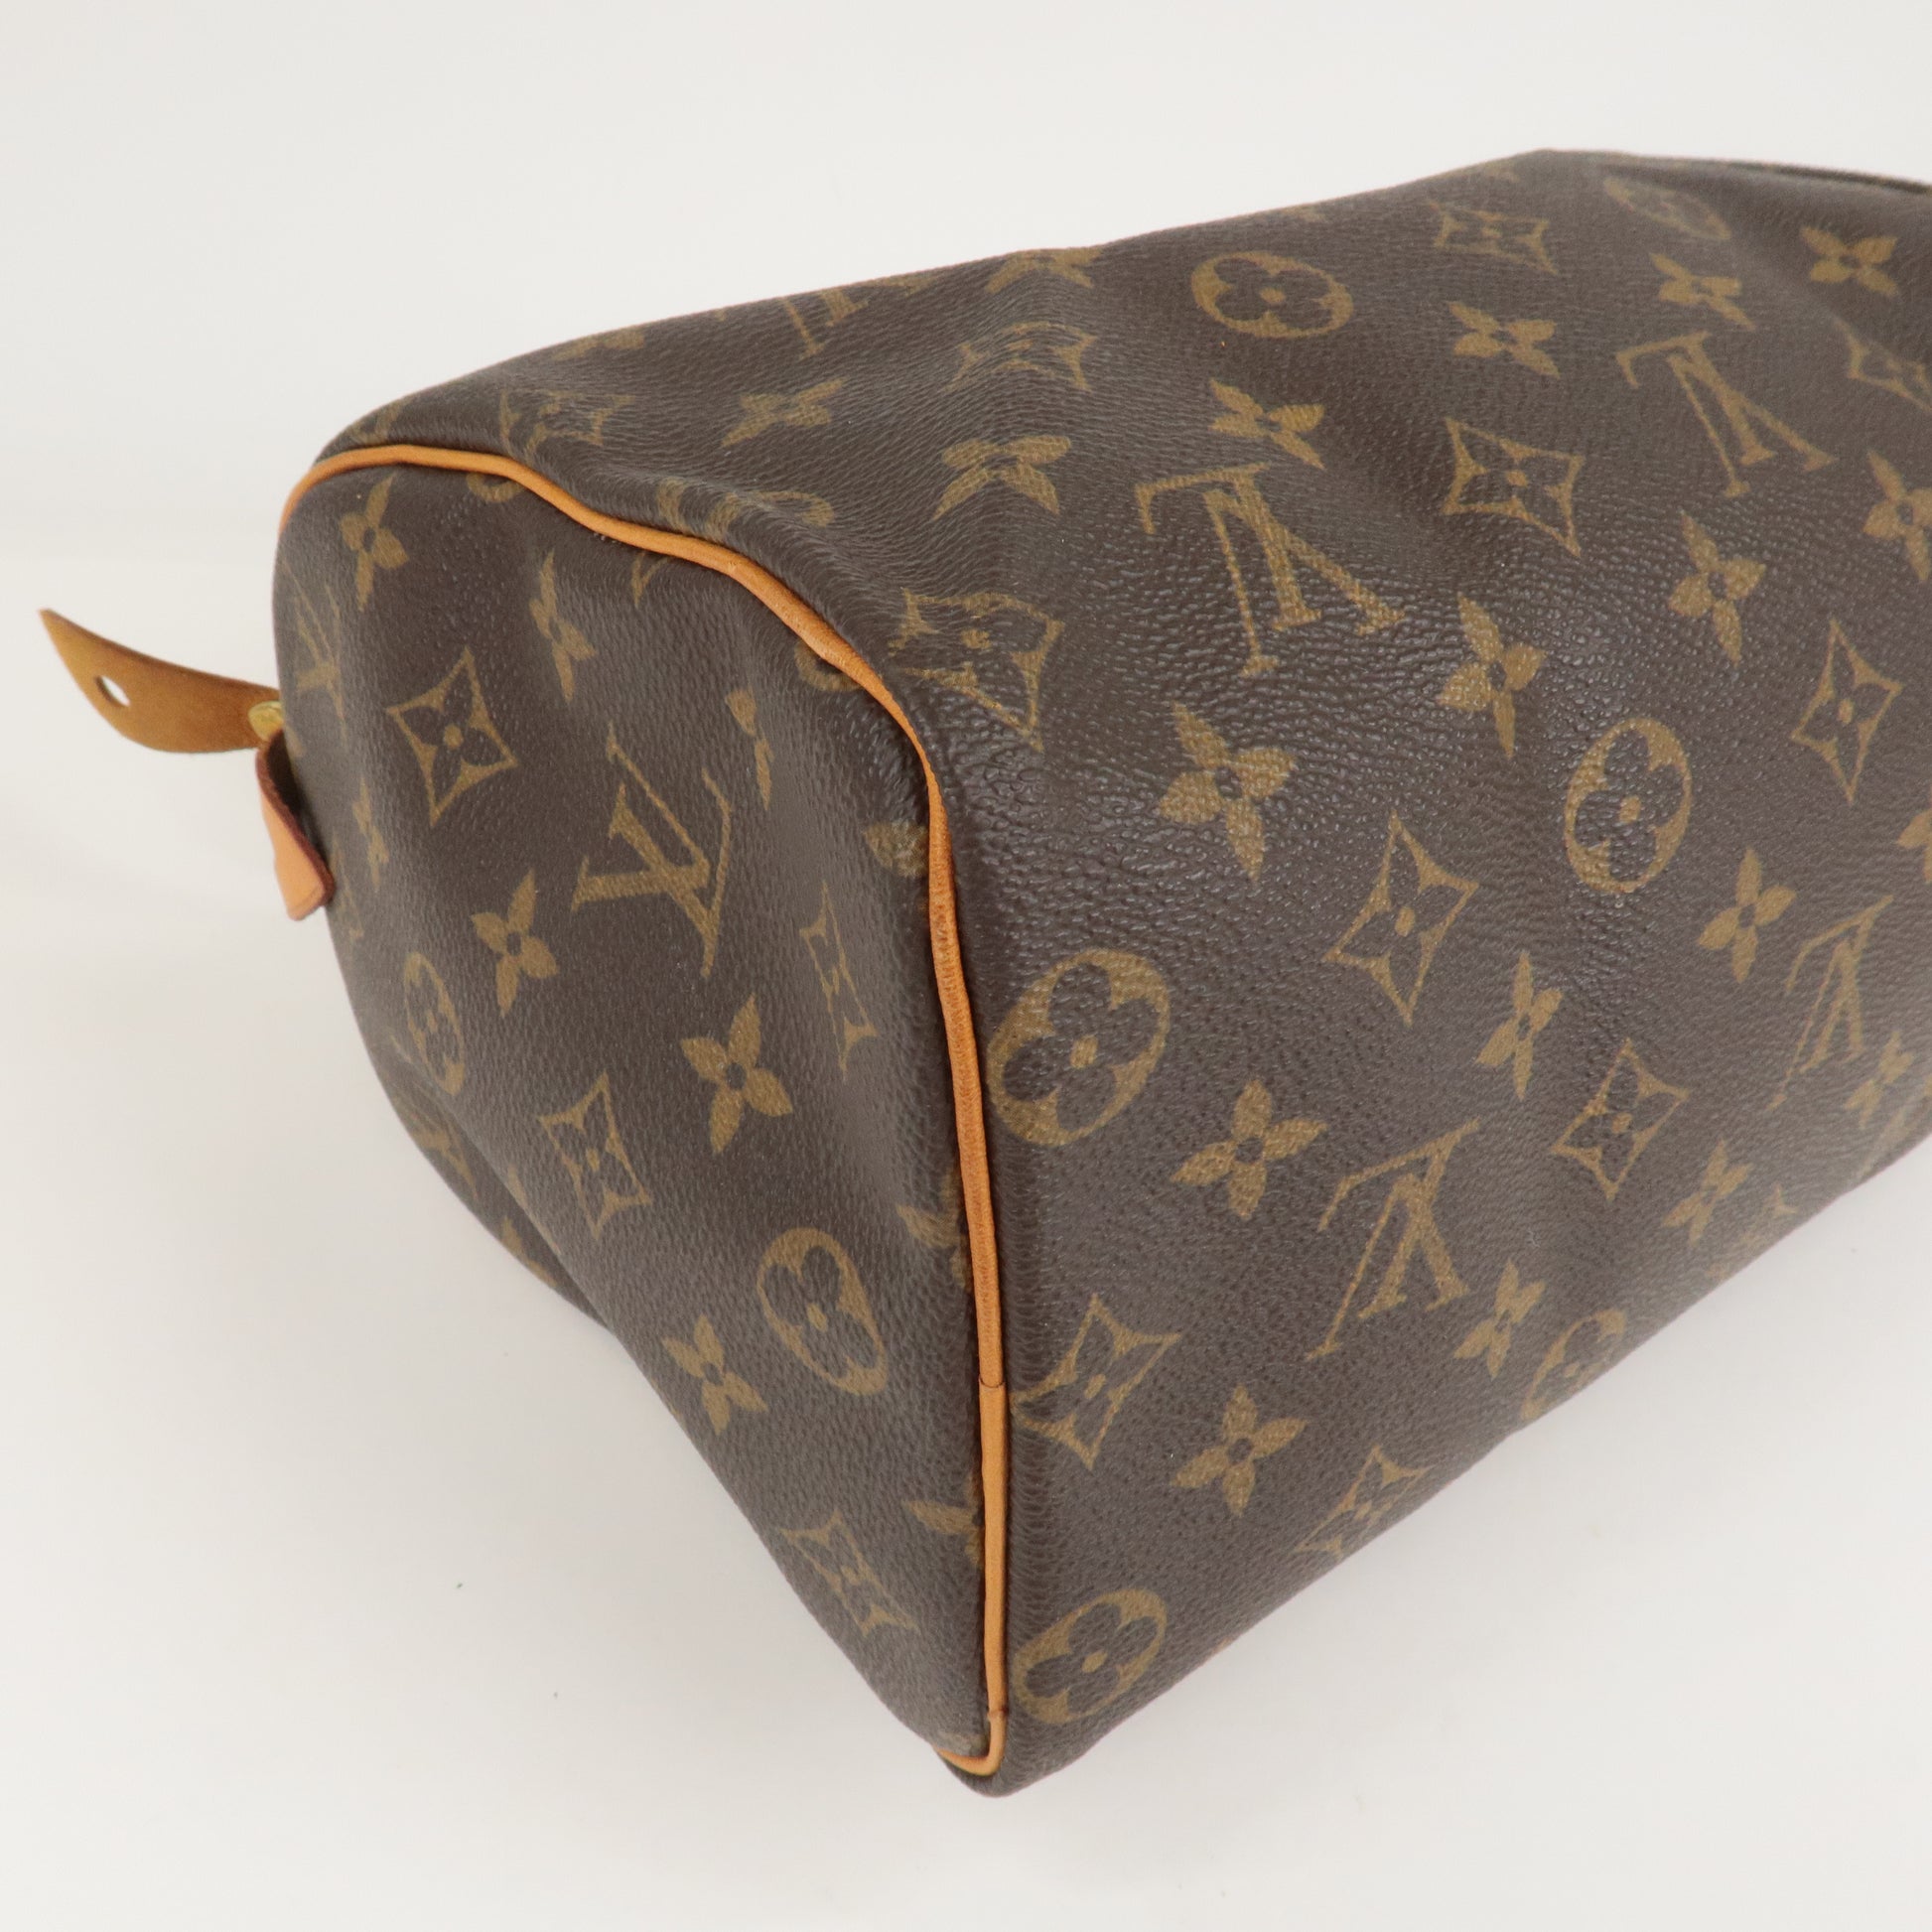 Louis Vuitton Speedy 40 Monogram Canvas Duffel Bag on SALE